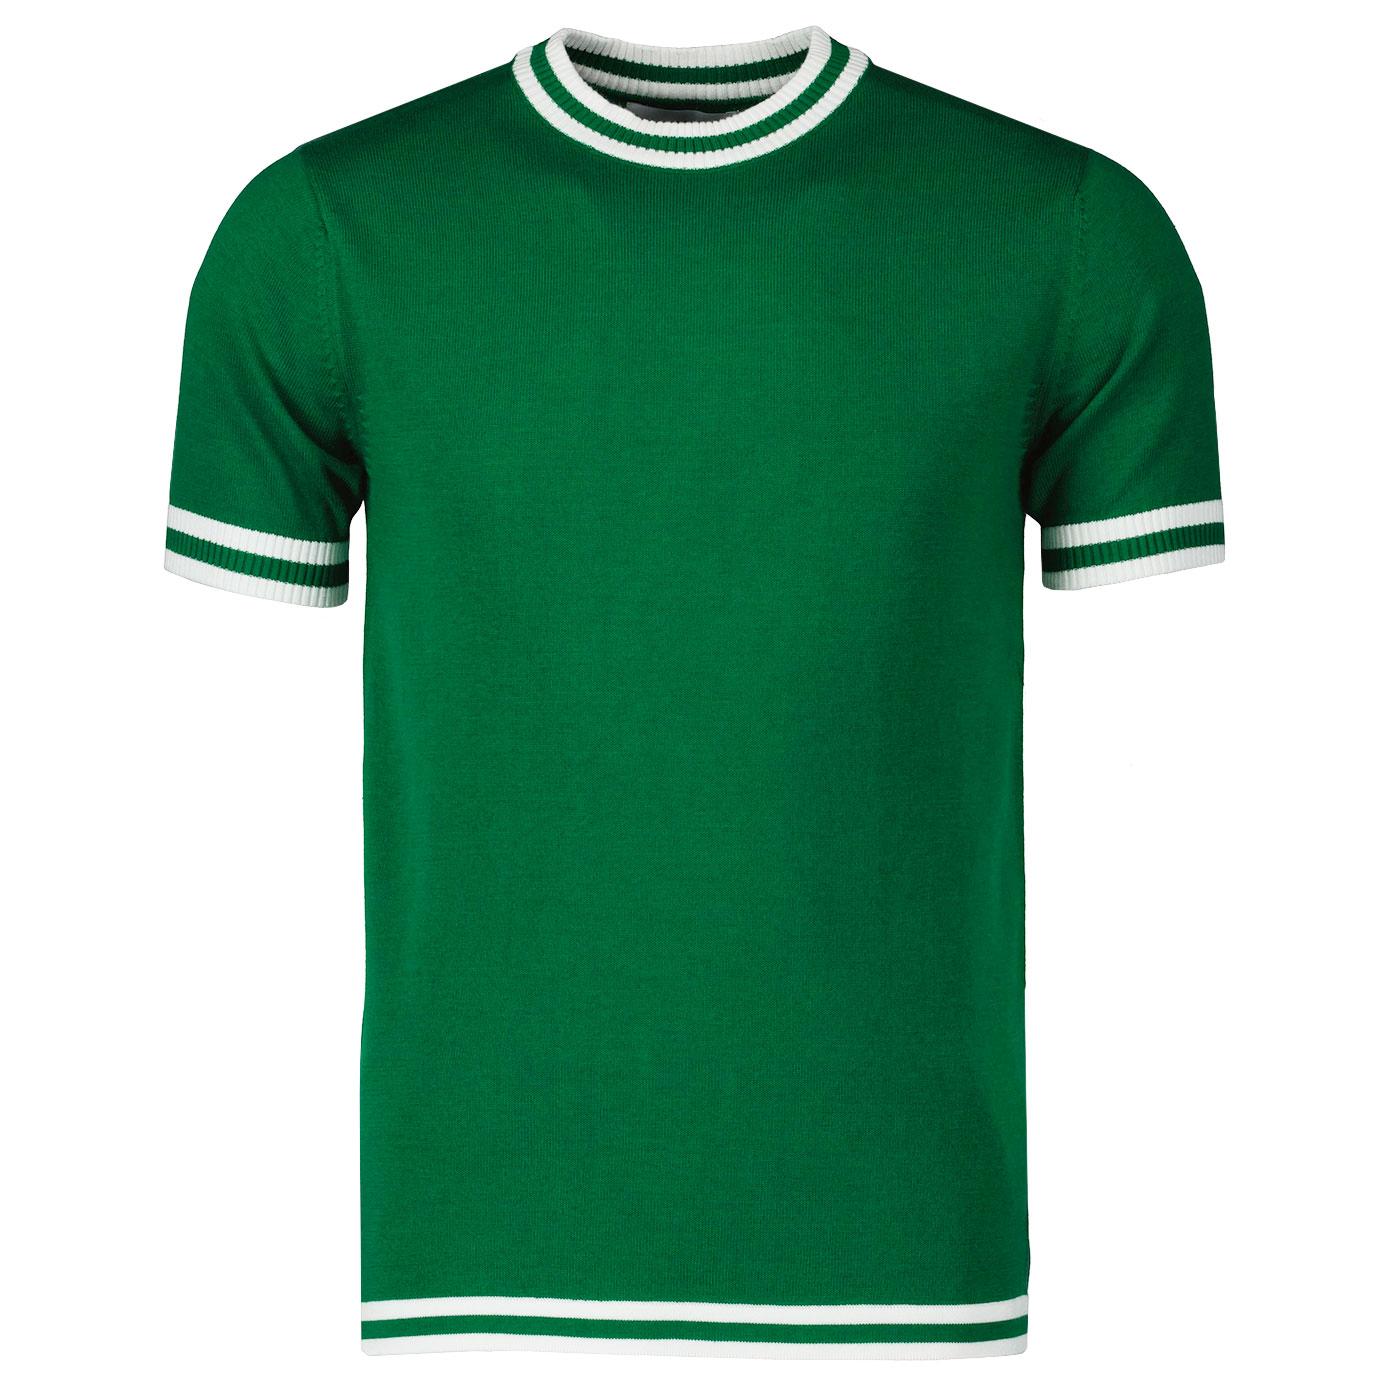 Men's Green Short Sleeve Crew Neck Knitted T-Shirt